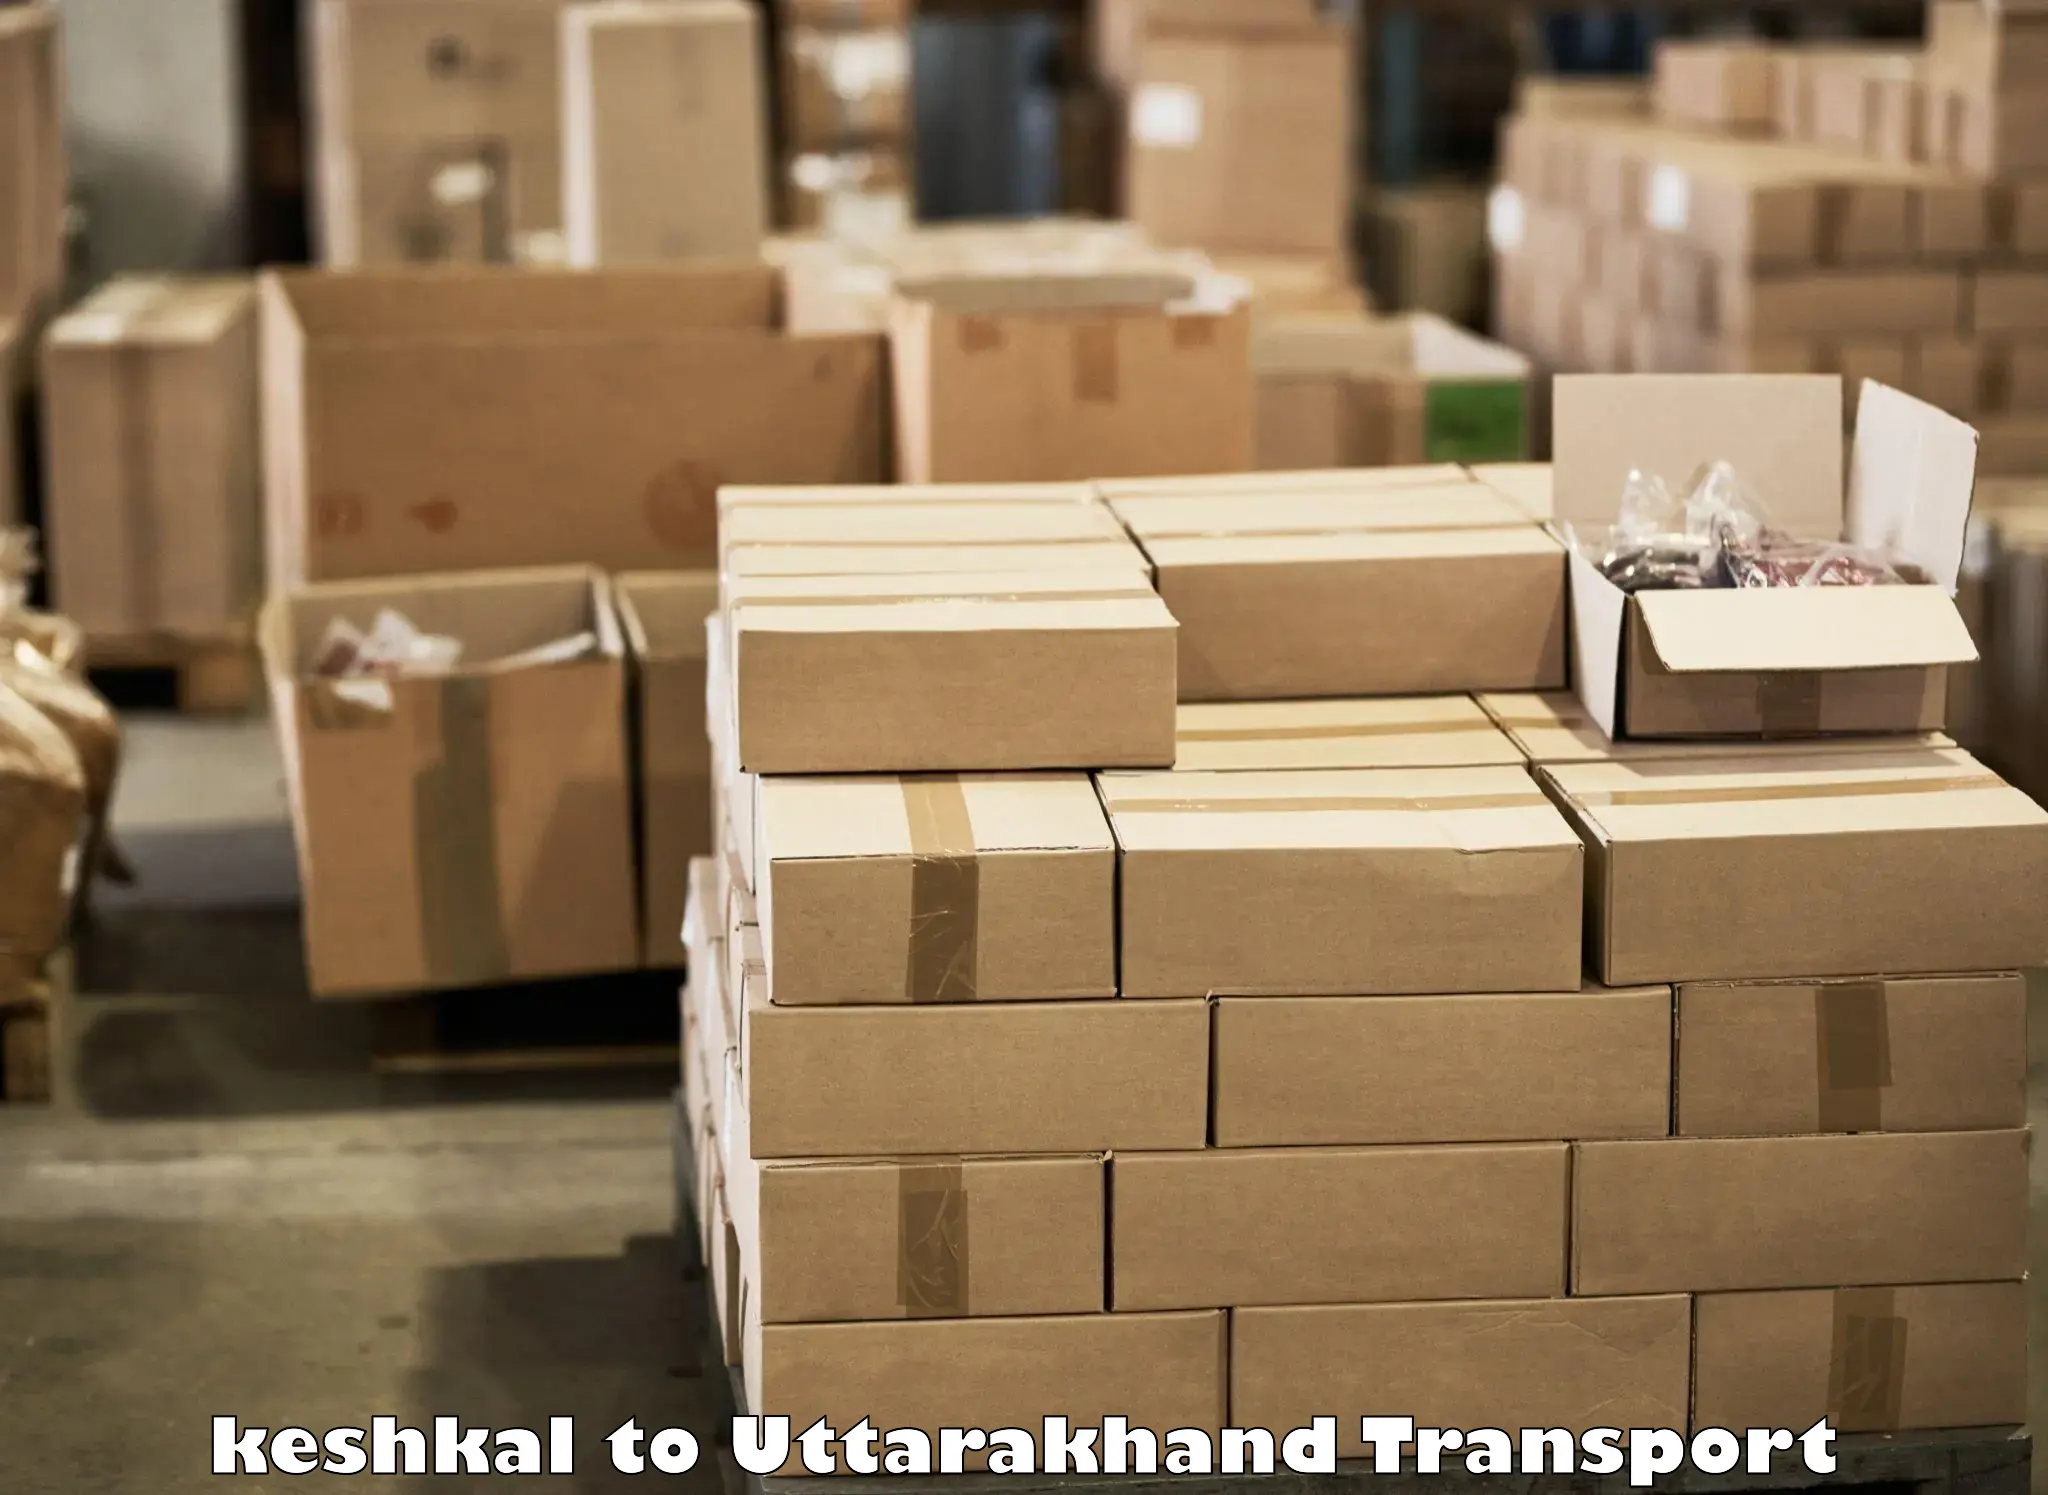 Truck transport companies in India keshkal to Tehri